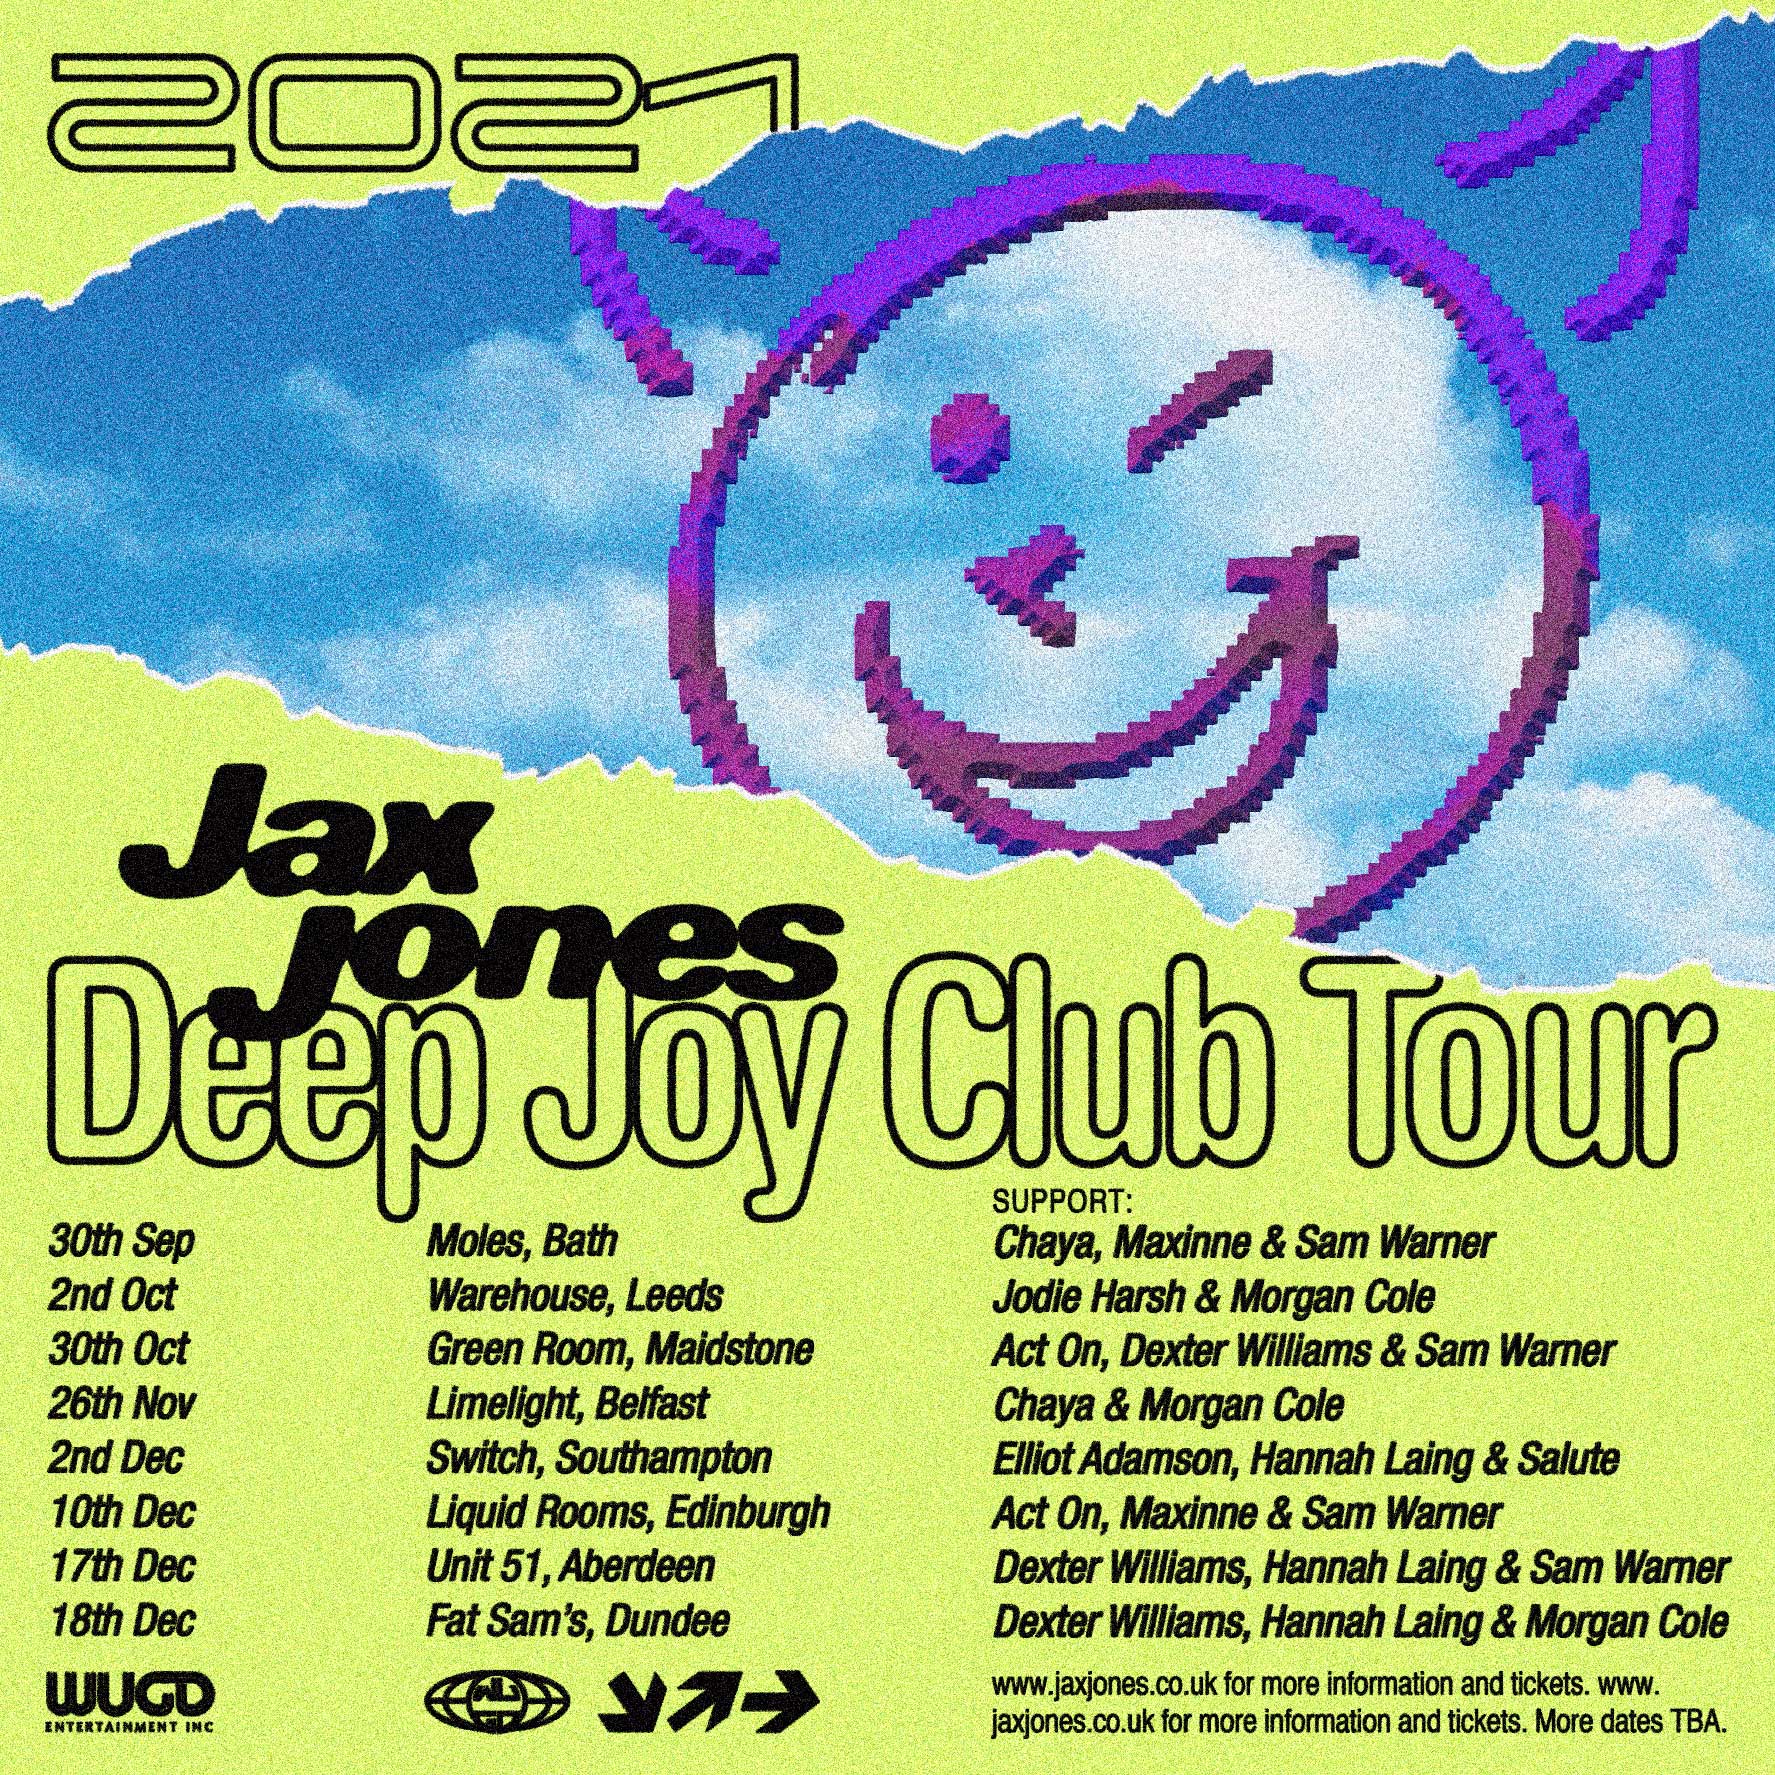 Deep Joy Club Tour